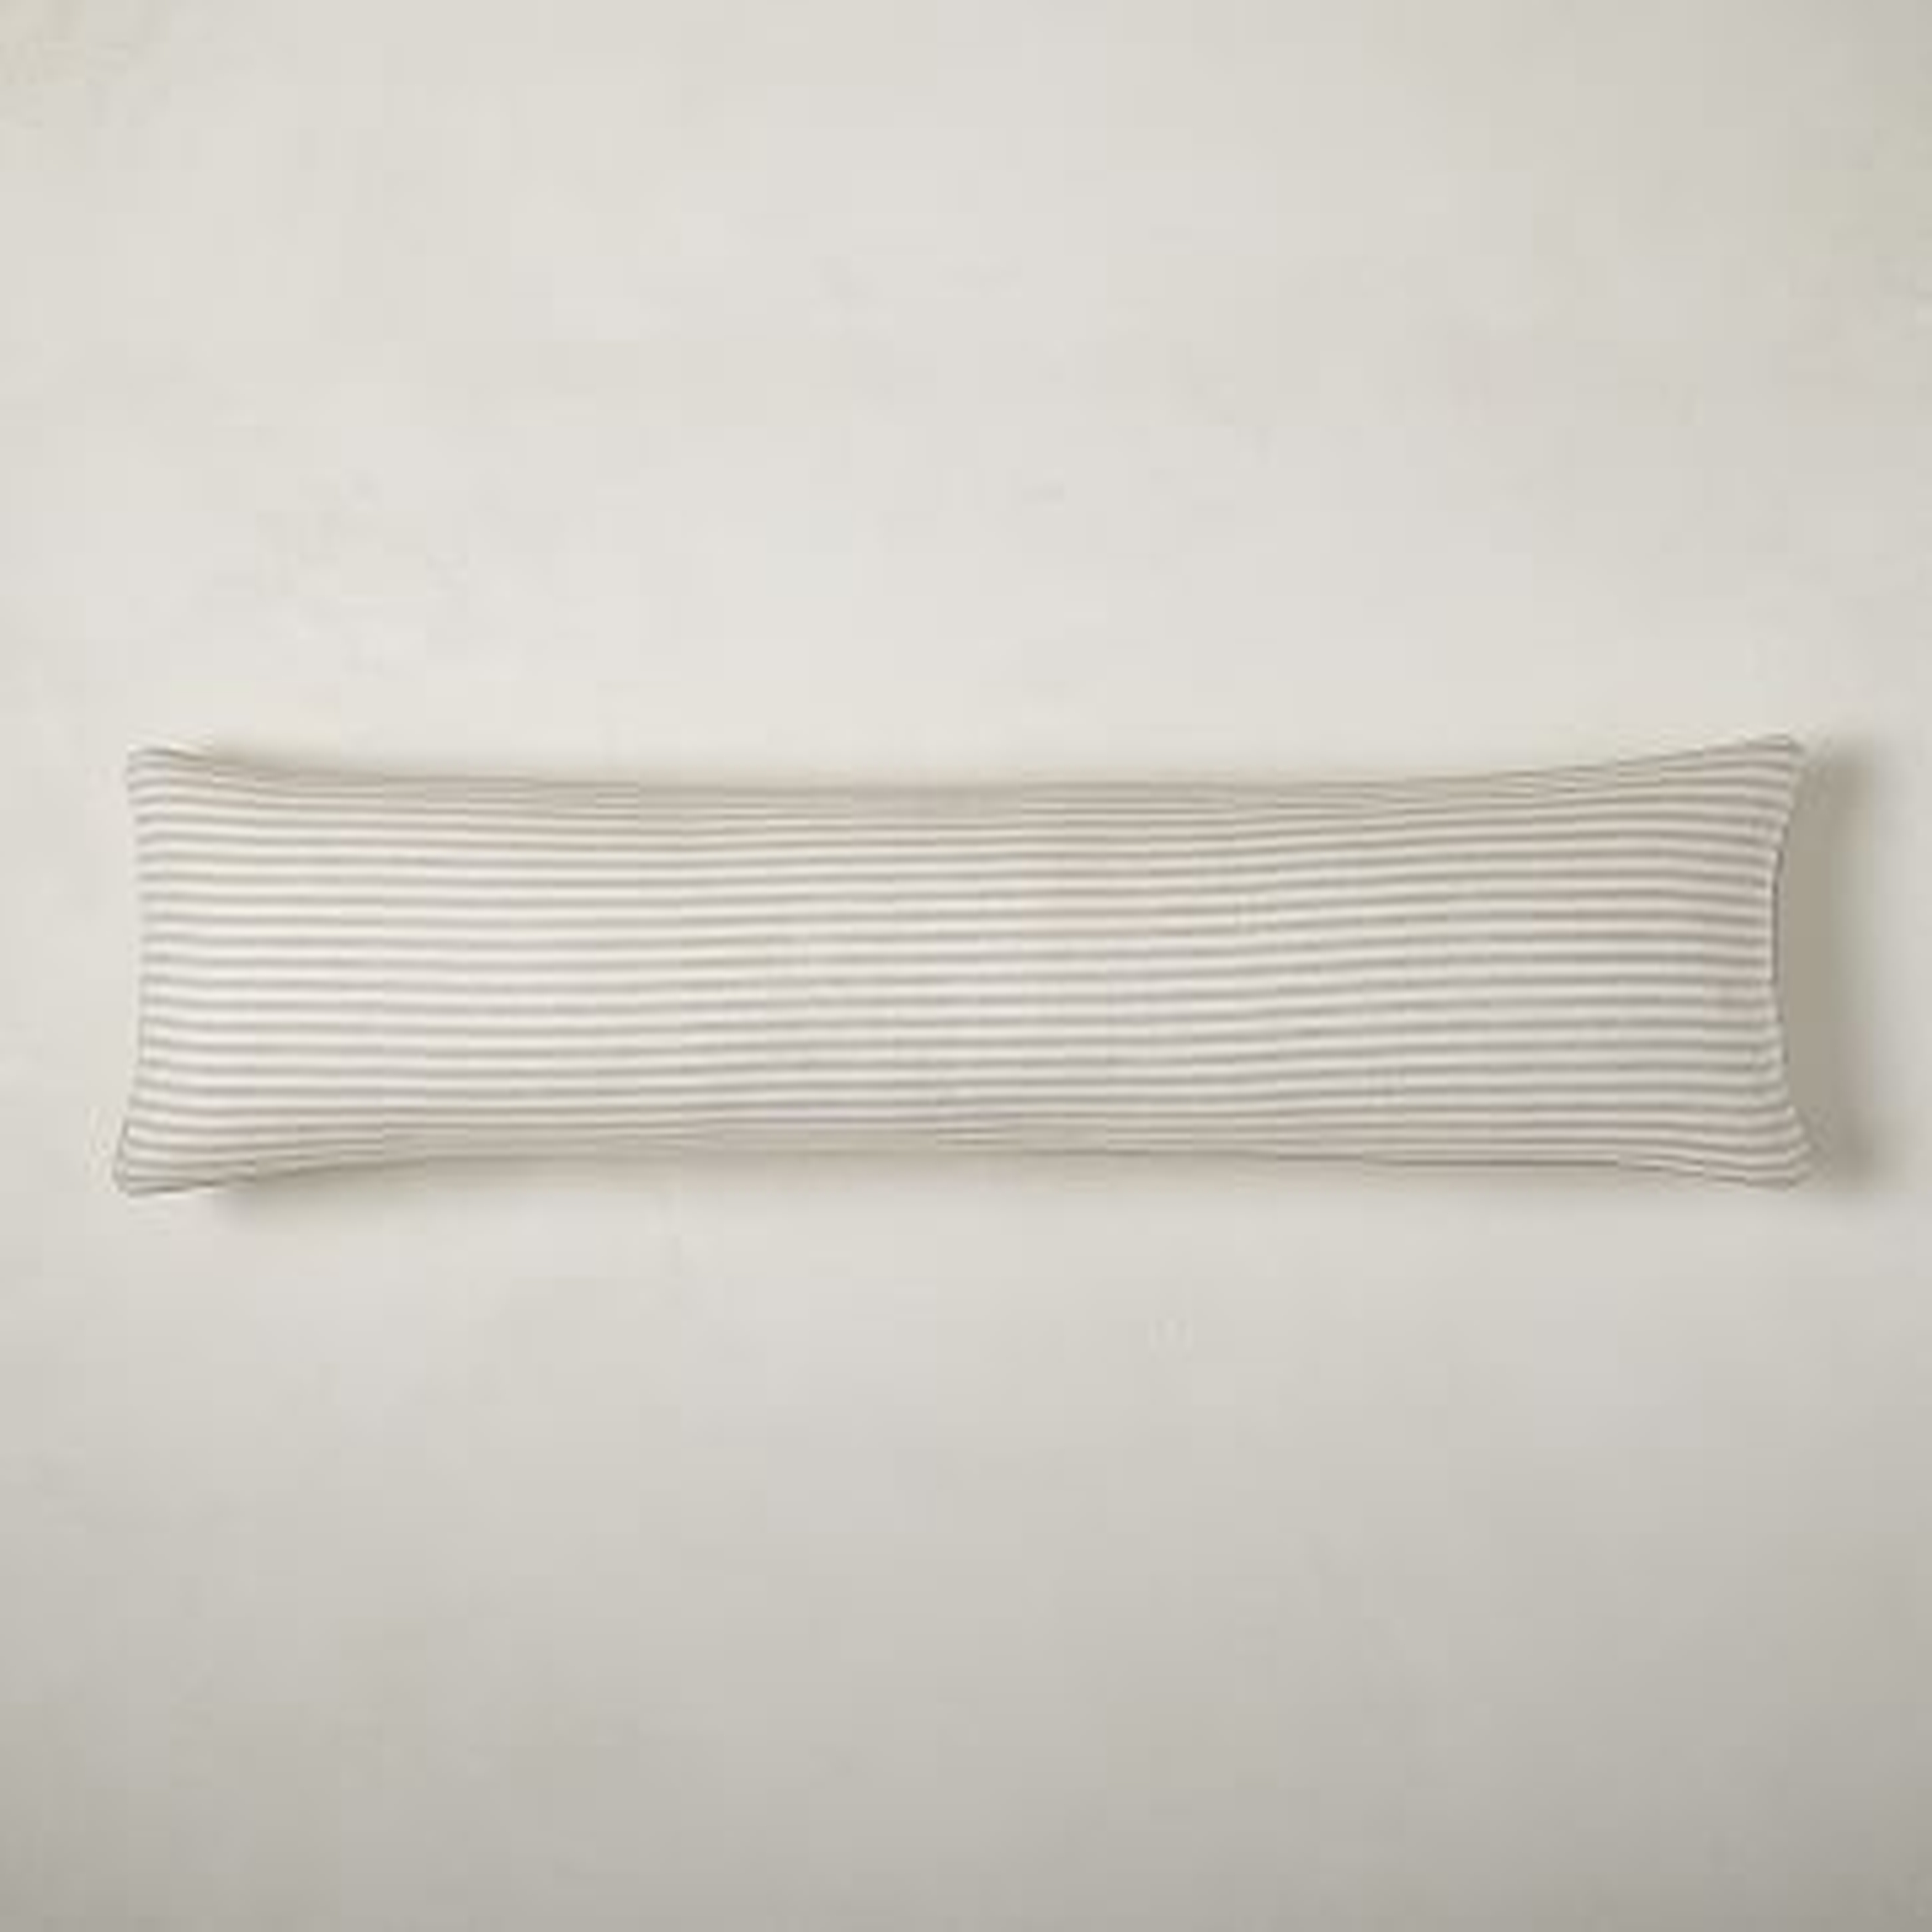 European Linen Stripe Pillow Cover, 12"x46", Sand - West Elm